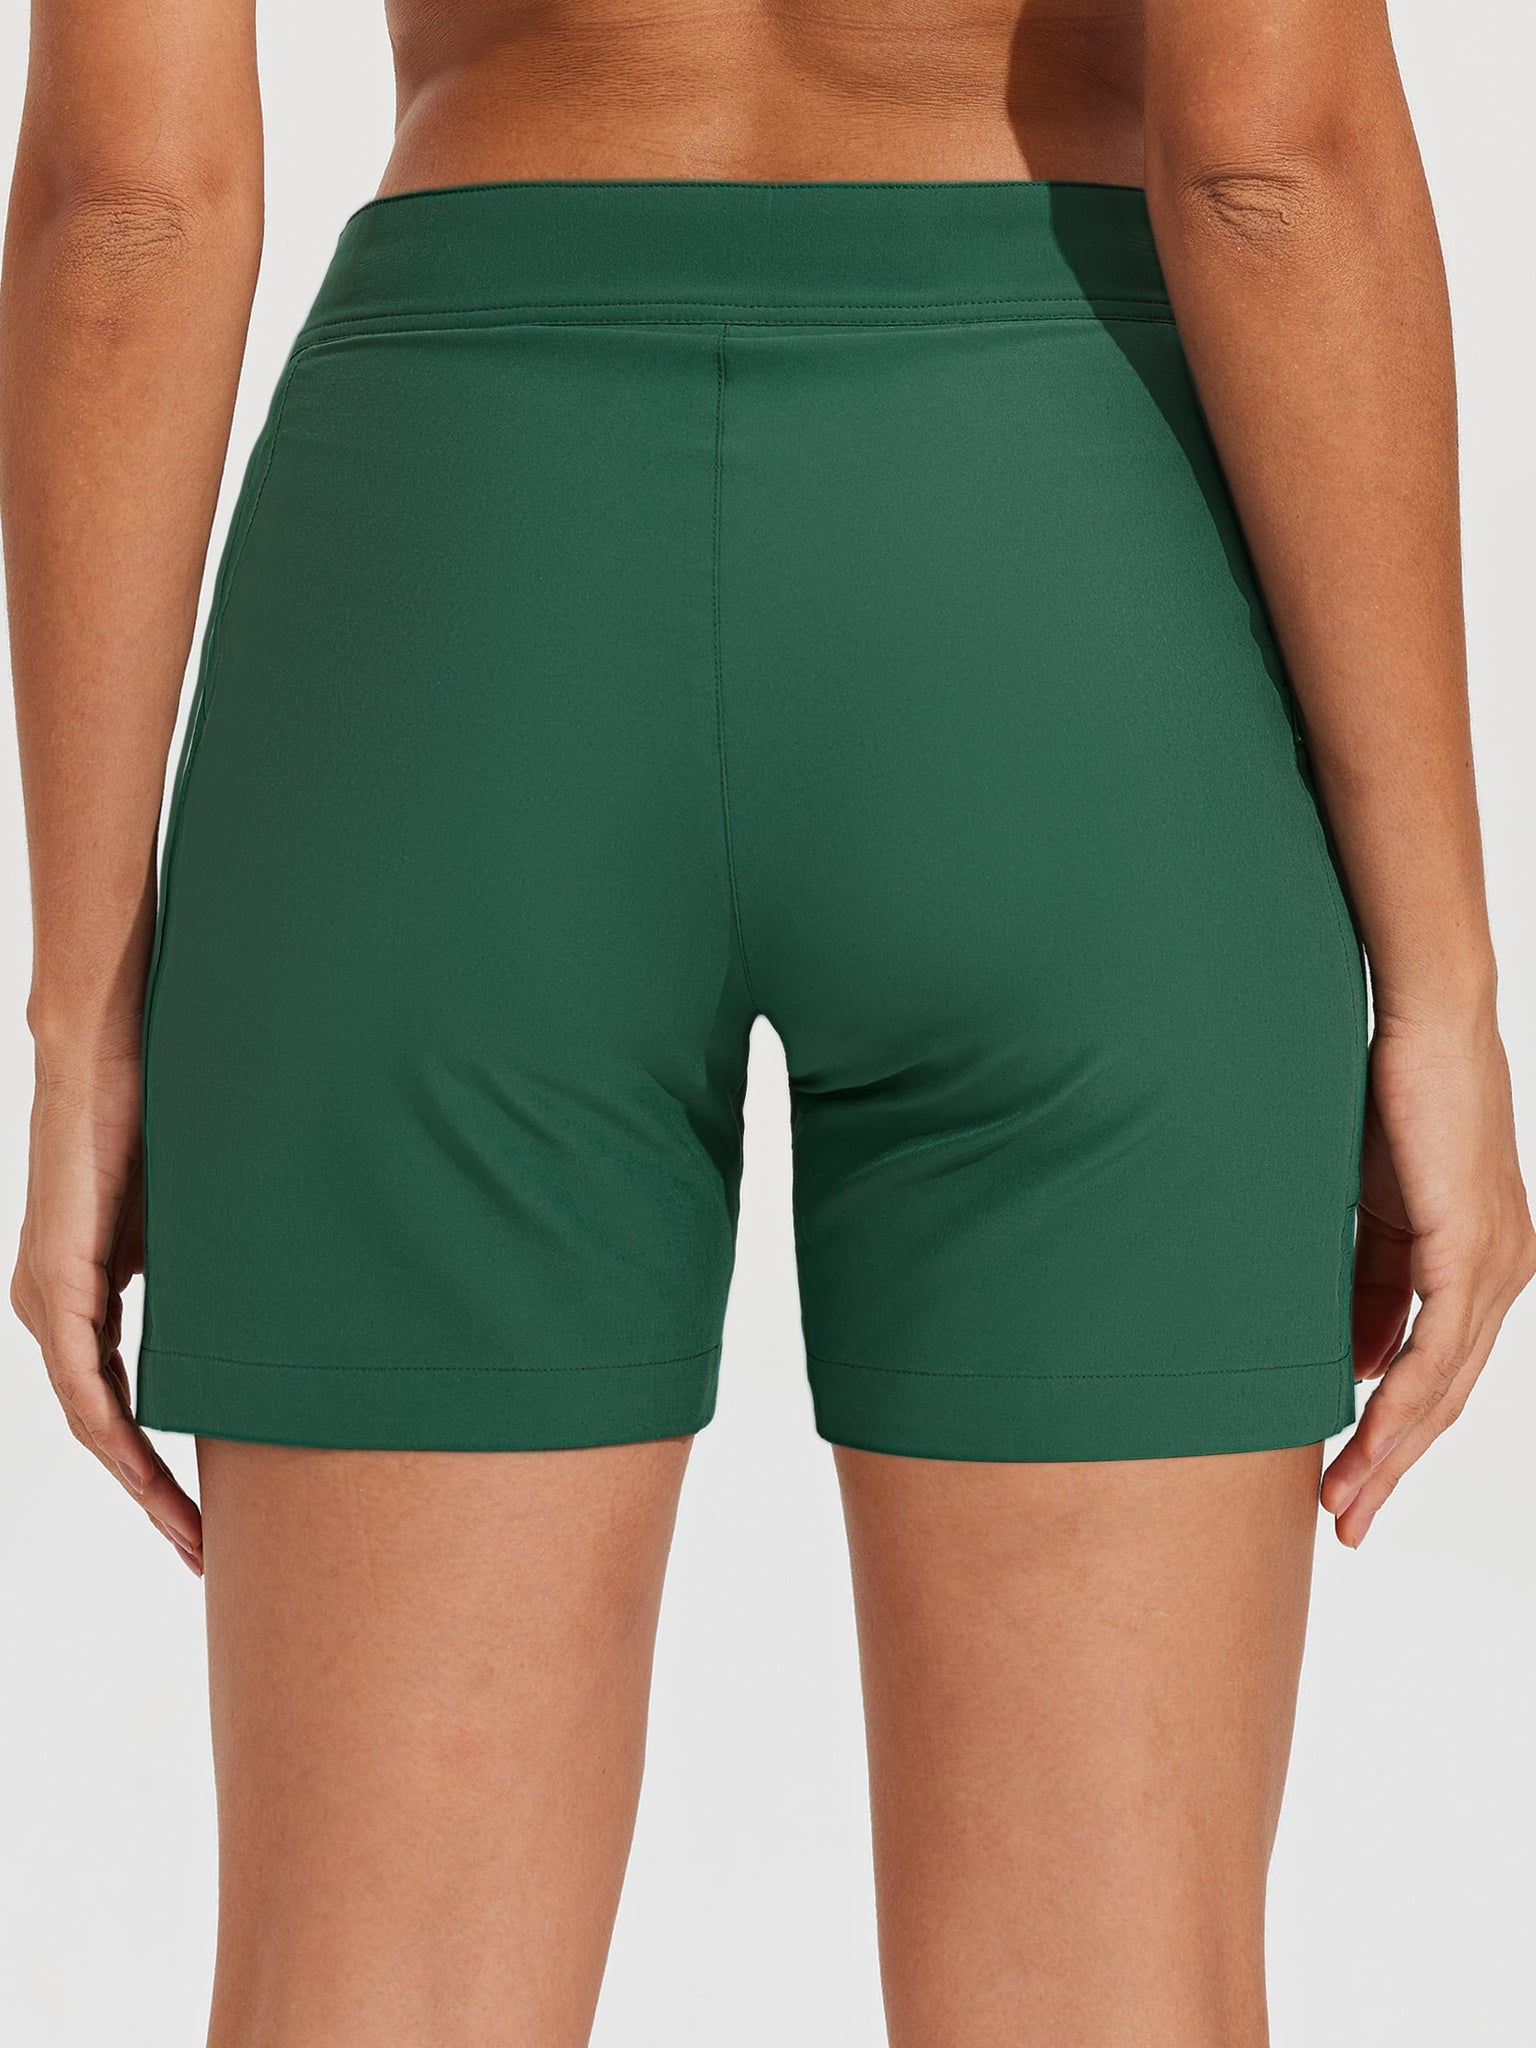 Women's Fixed Waist Board Shorts_Green_model2